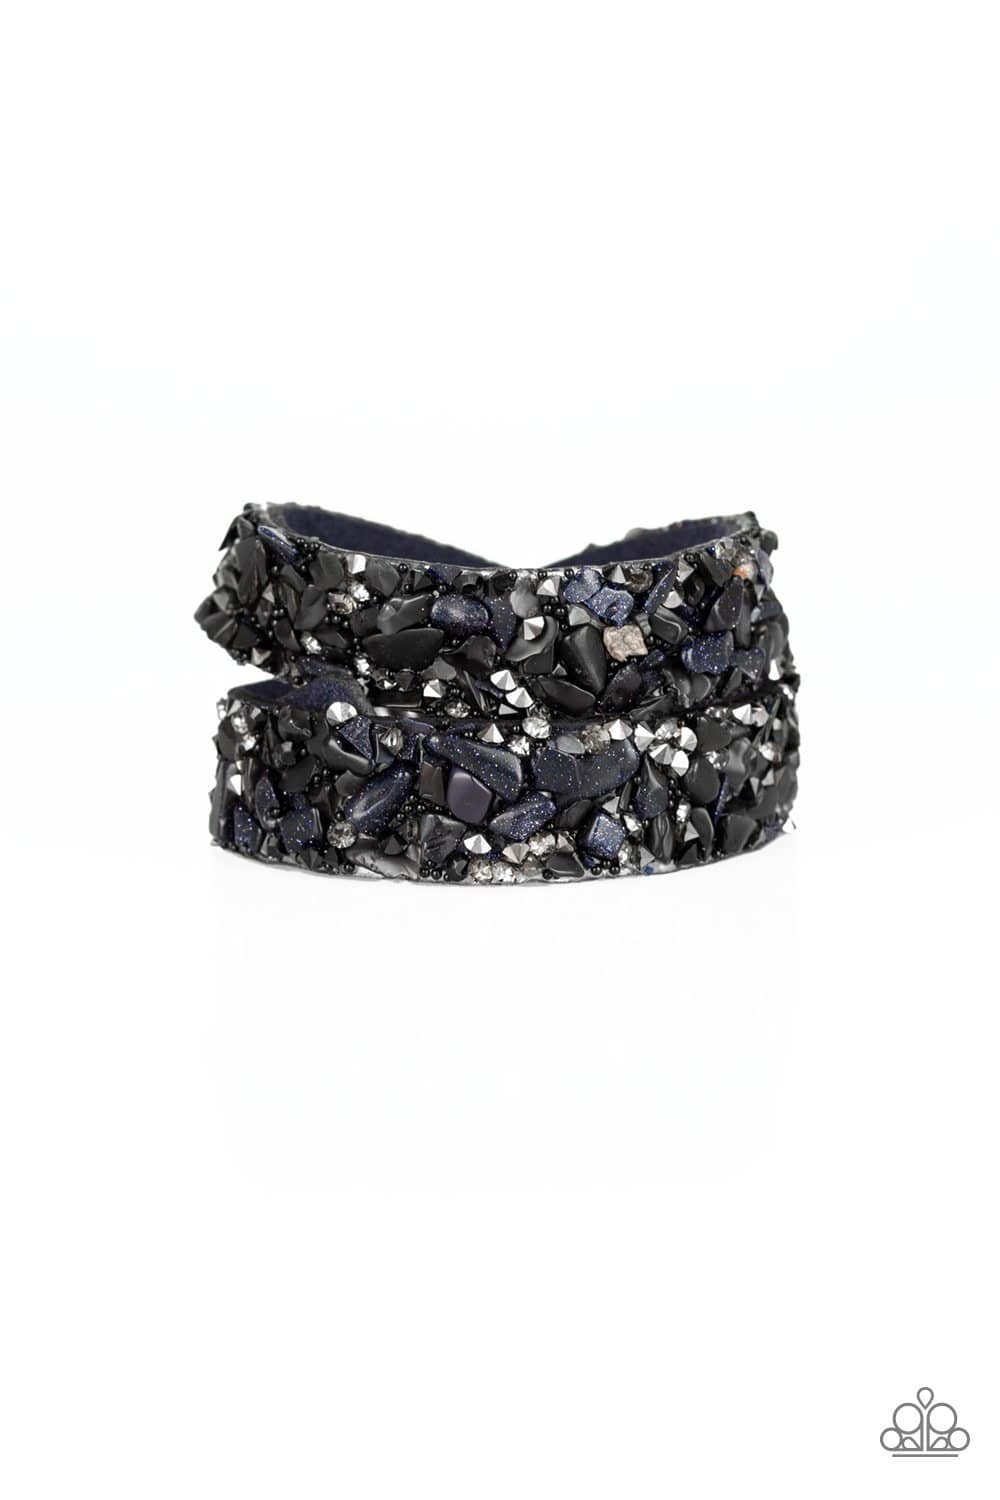 CRUSH Hour - Blue Crushed Rock Wrap Bracelet - Paparazzi Accessories - GlaMarous Titi Jewels